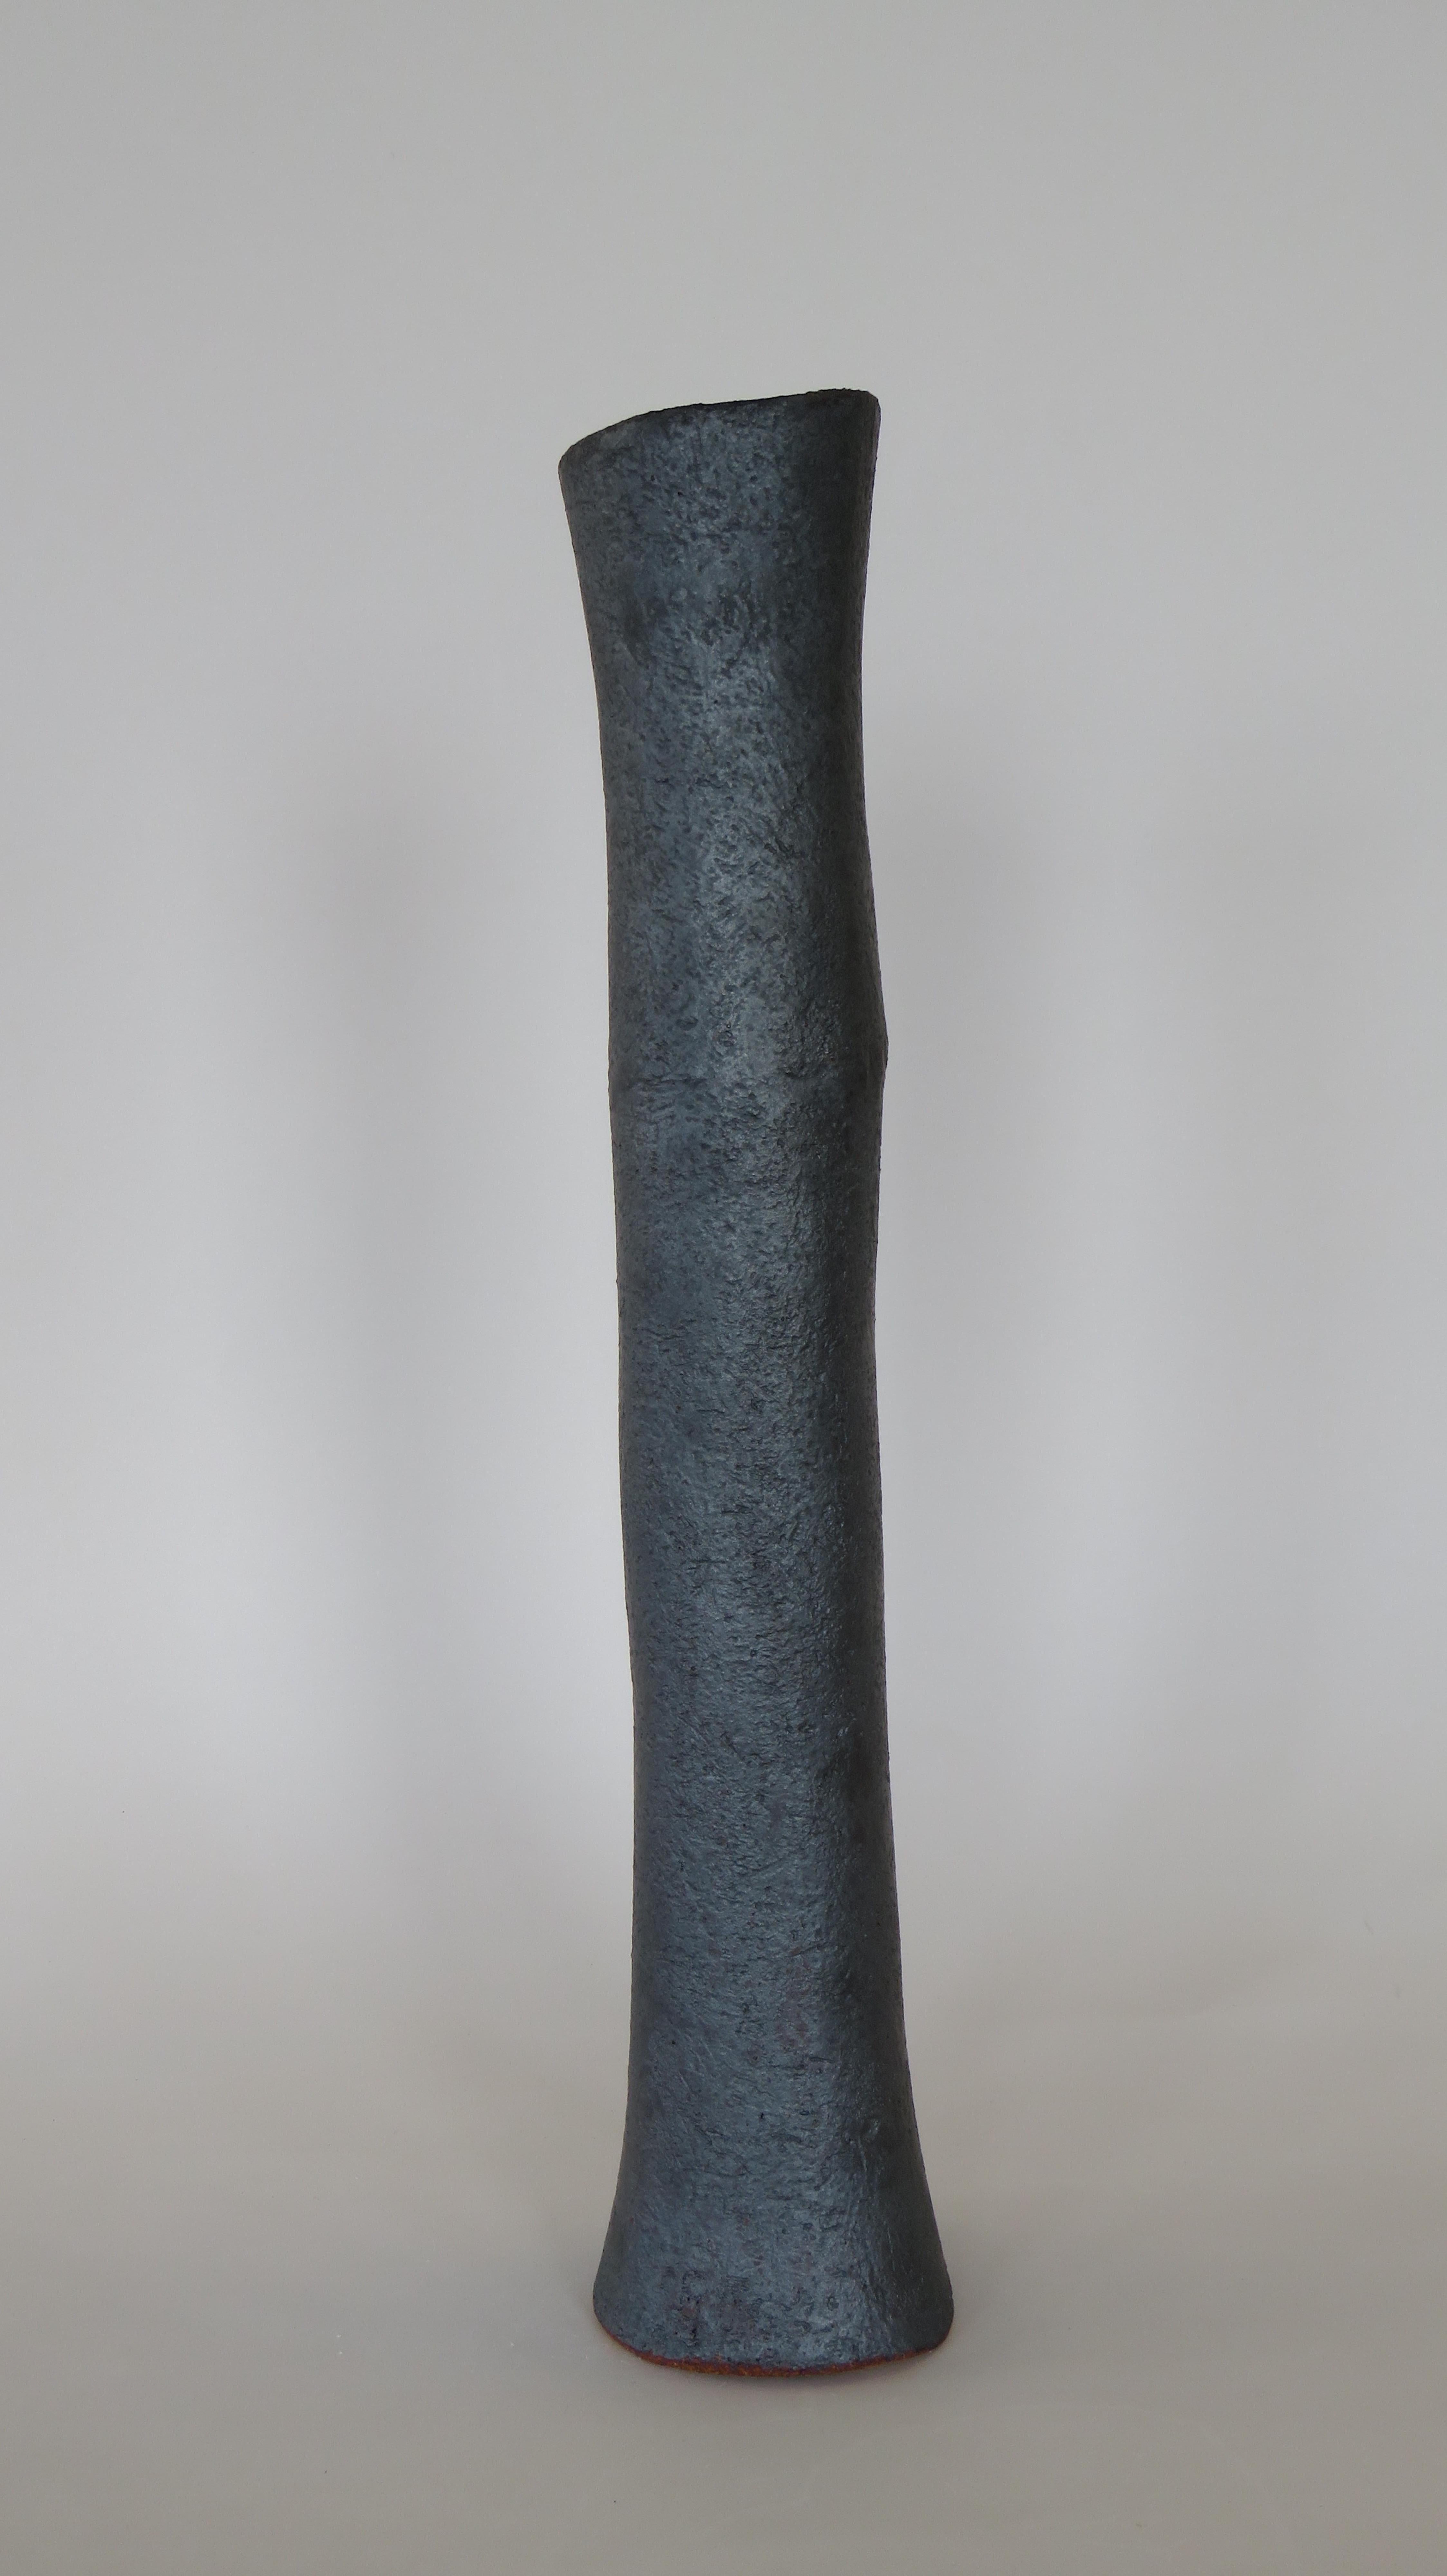 Organic Modern Tall, Tubular Metallic Black Ceramic Stoneware Vase, Hand Built 19 Inches Tall